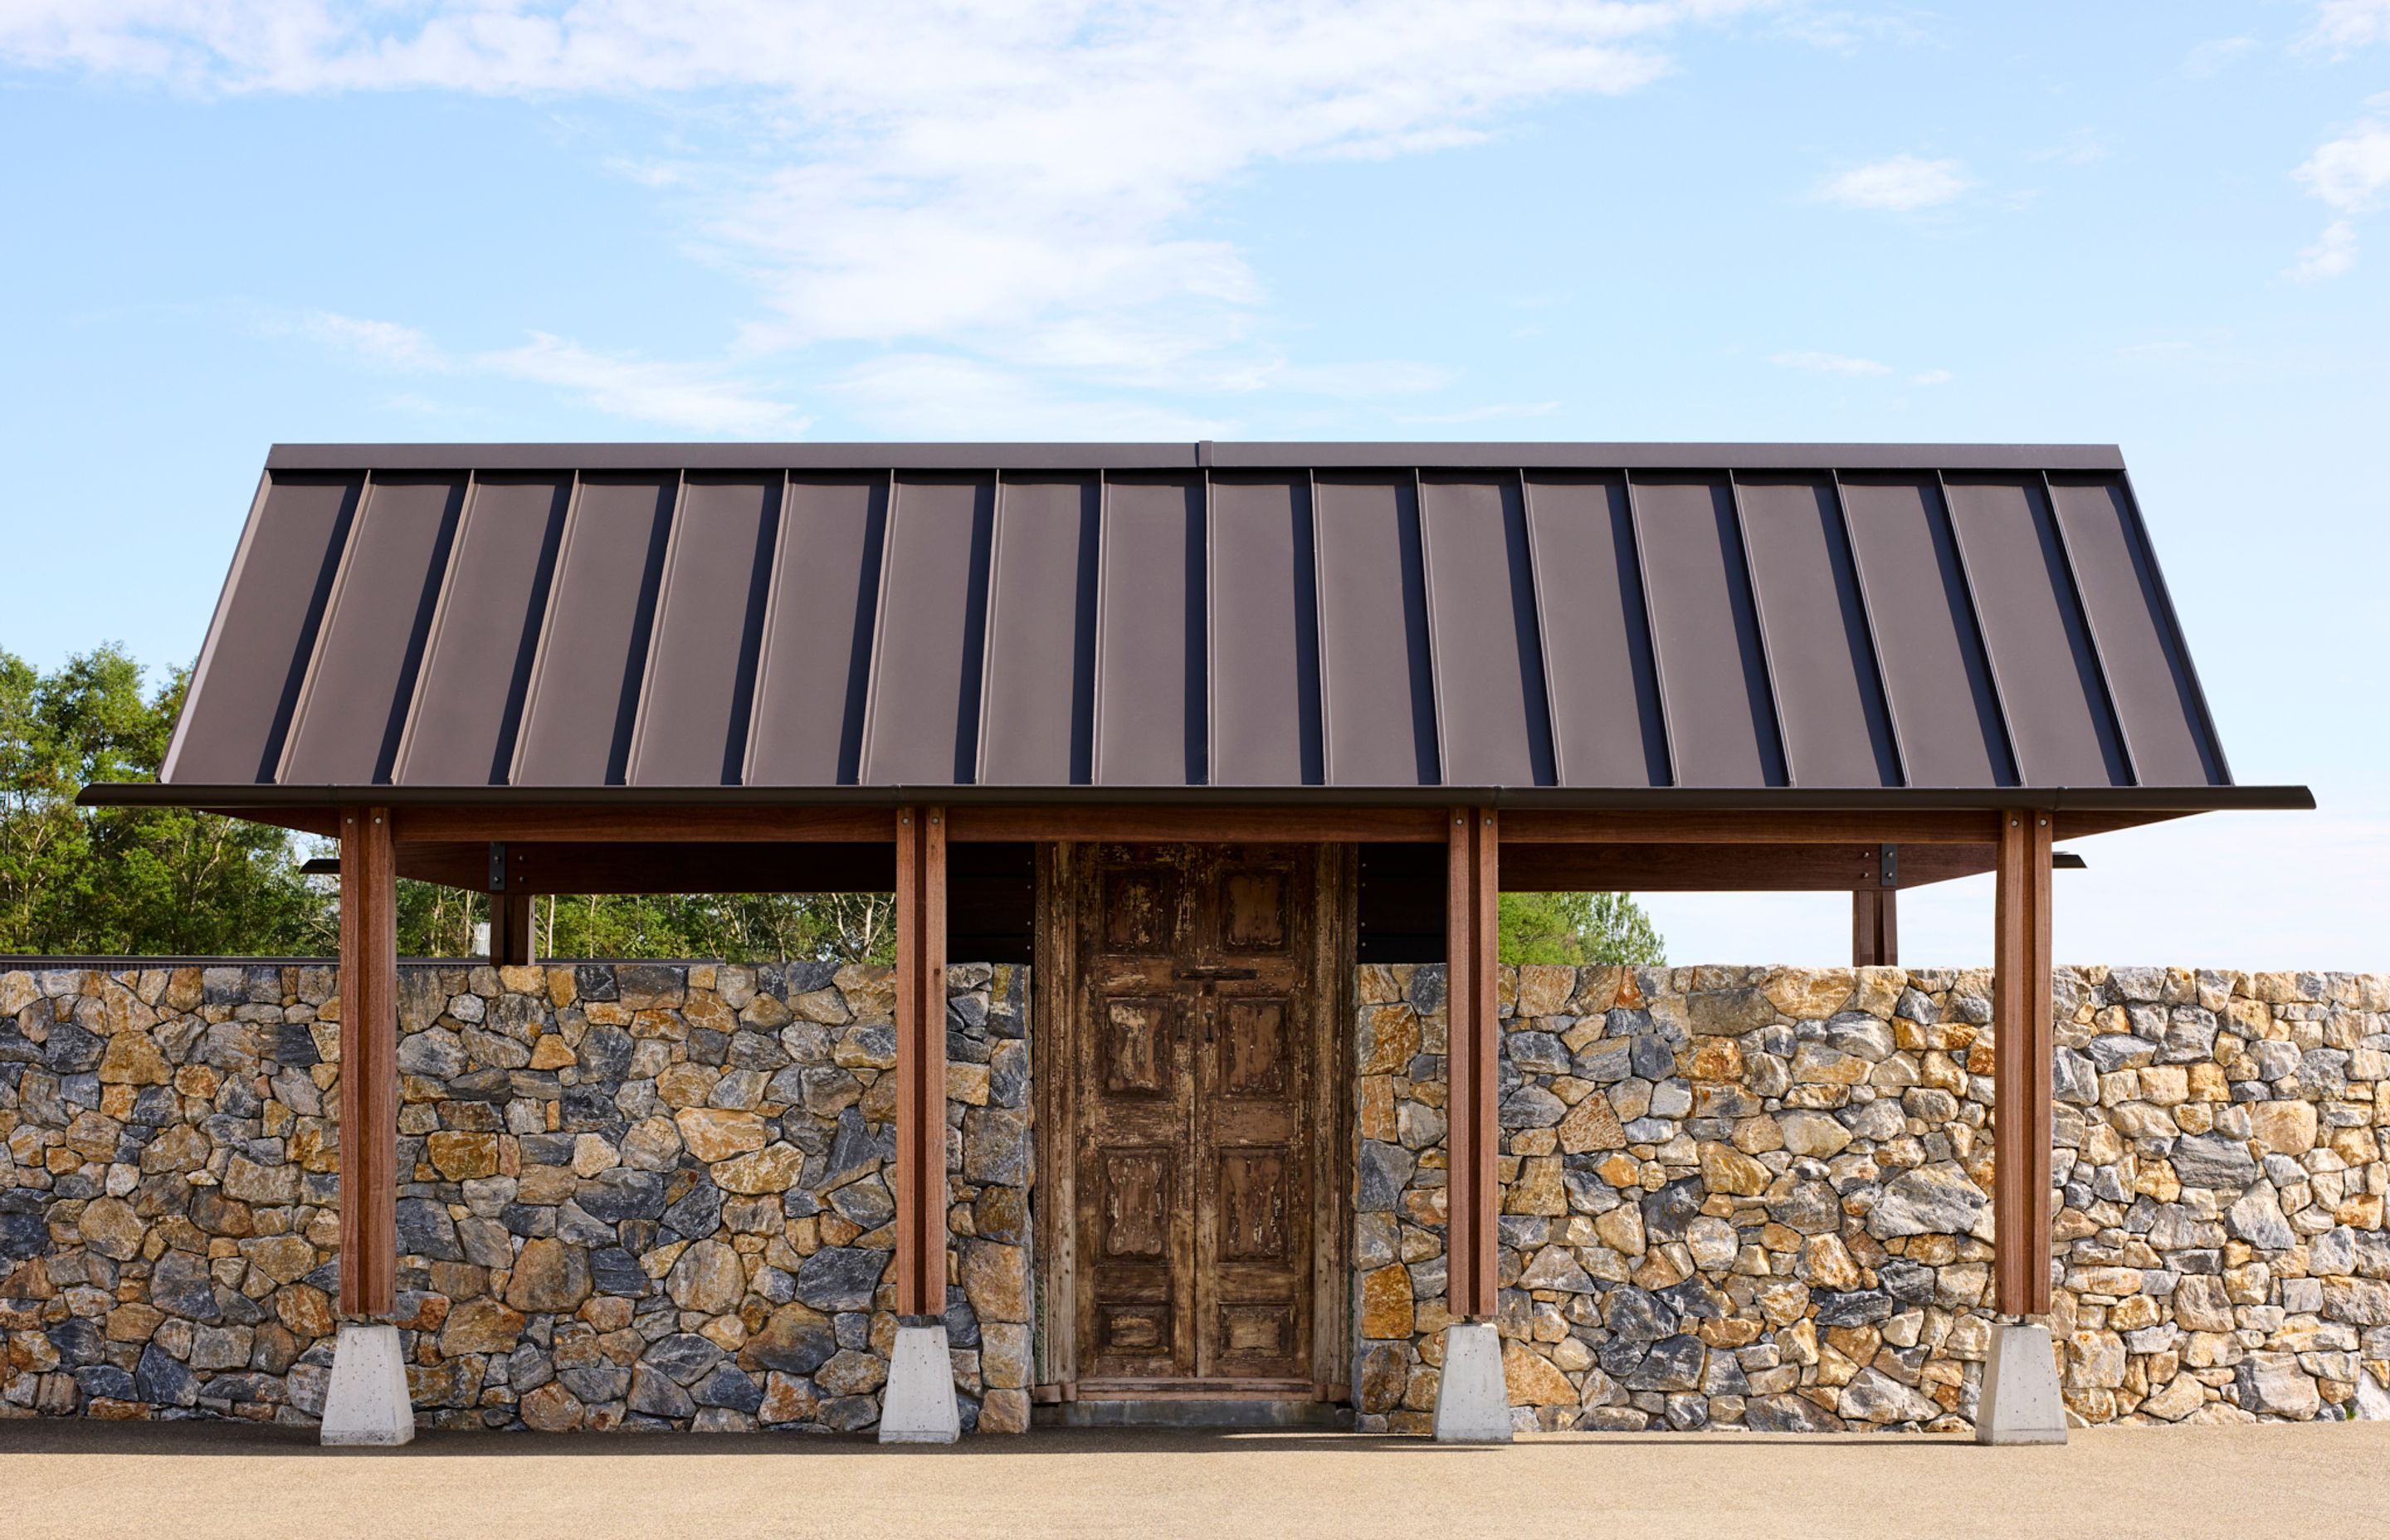 gibbons-architects-manawatu-stone-rural-toolshed-exterior-03.jpg